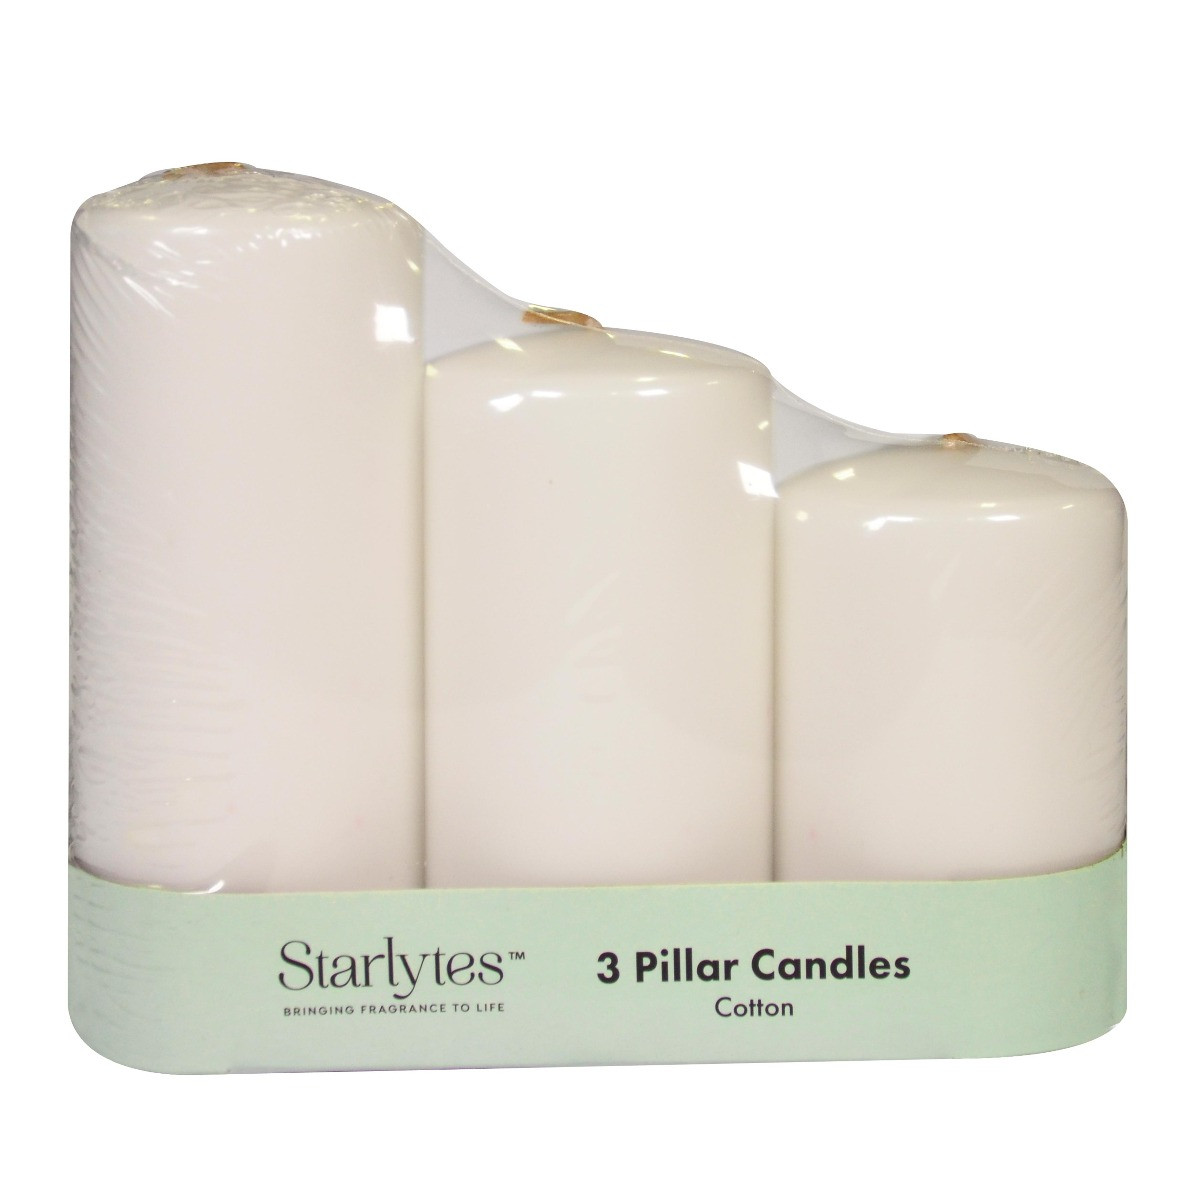 Starlytes Pillar Candle Set 3 Pack - Cotton>